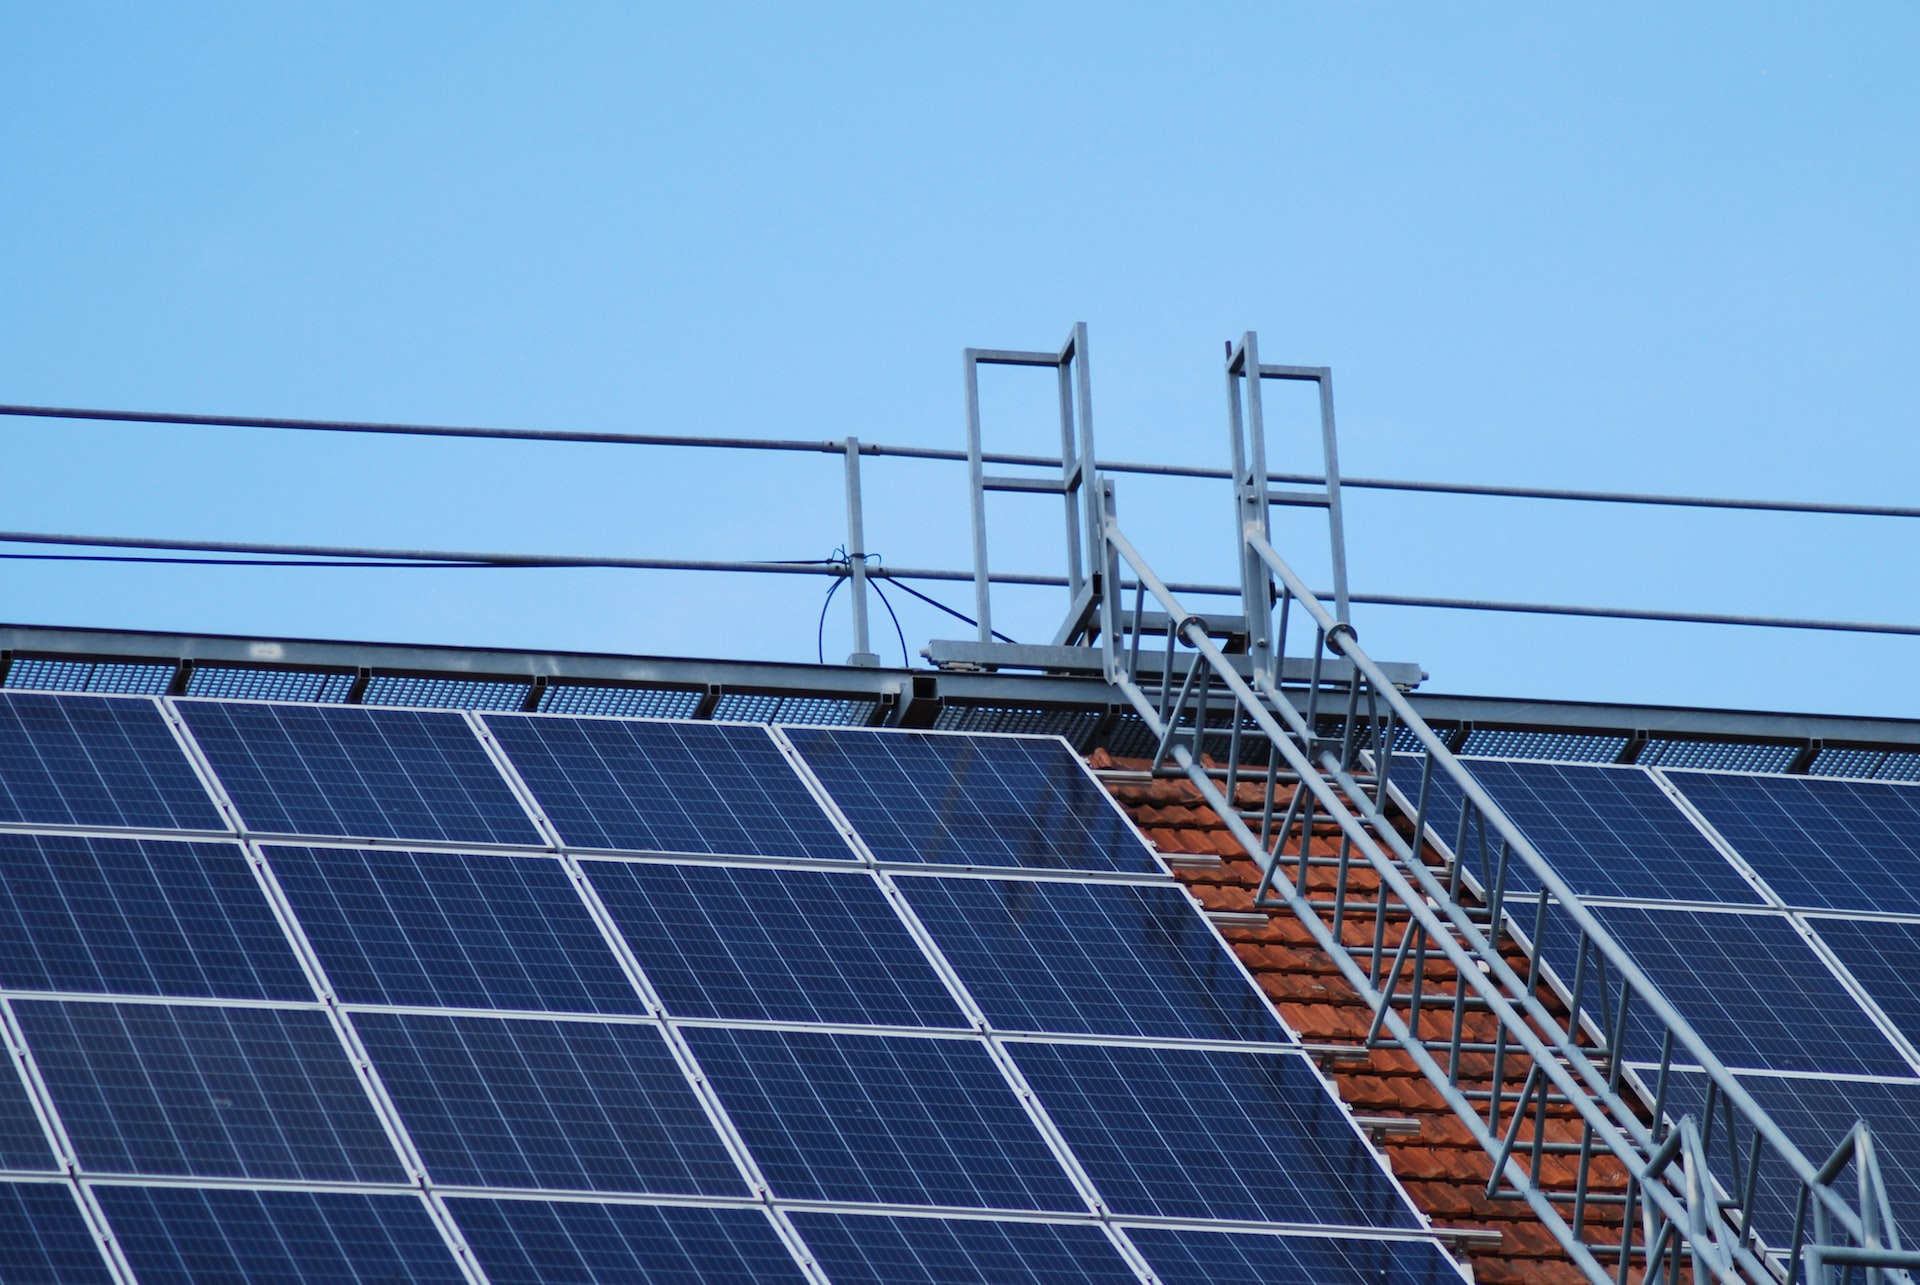 solar panels on gray metal frame under blue sky during daytime